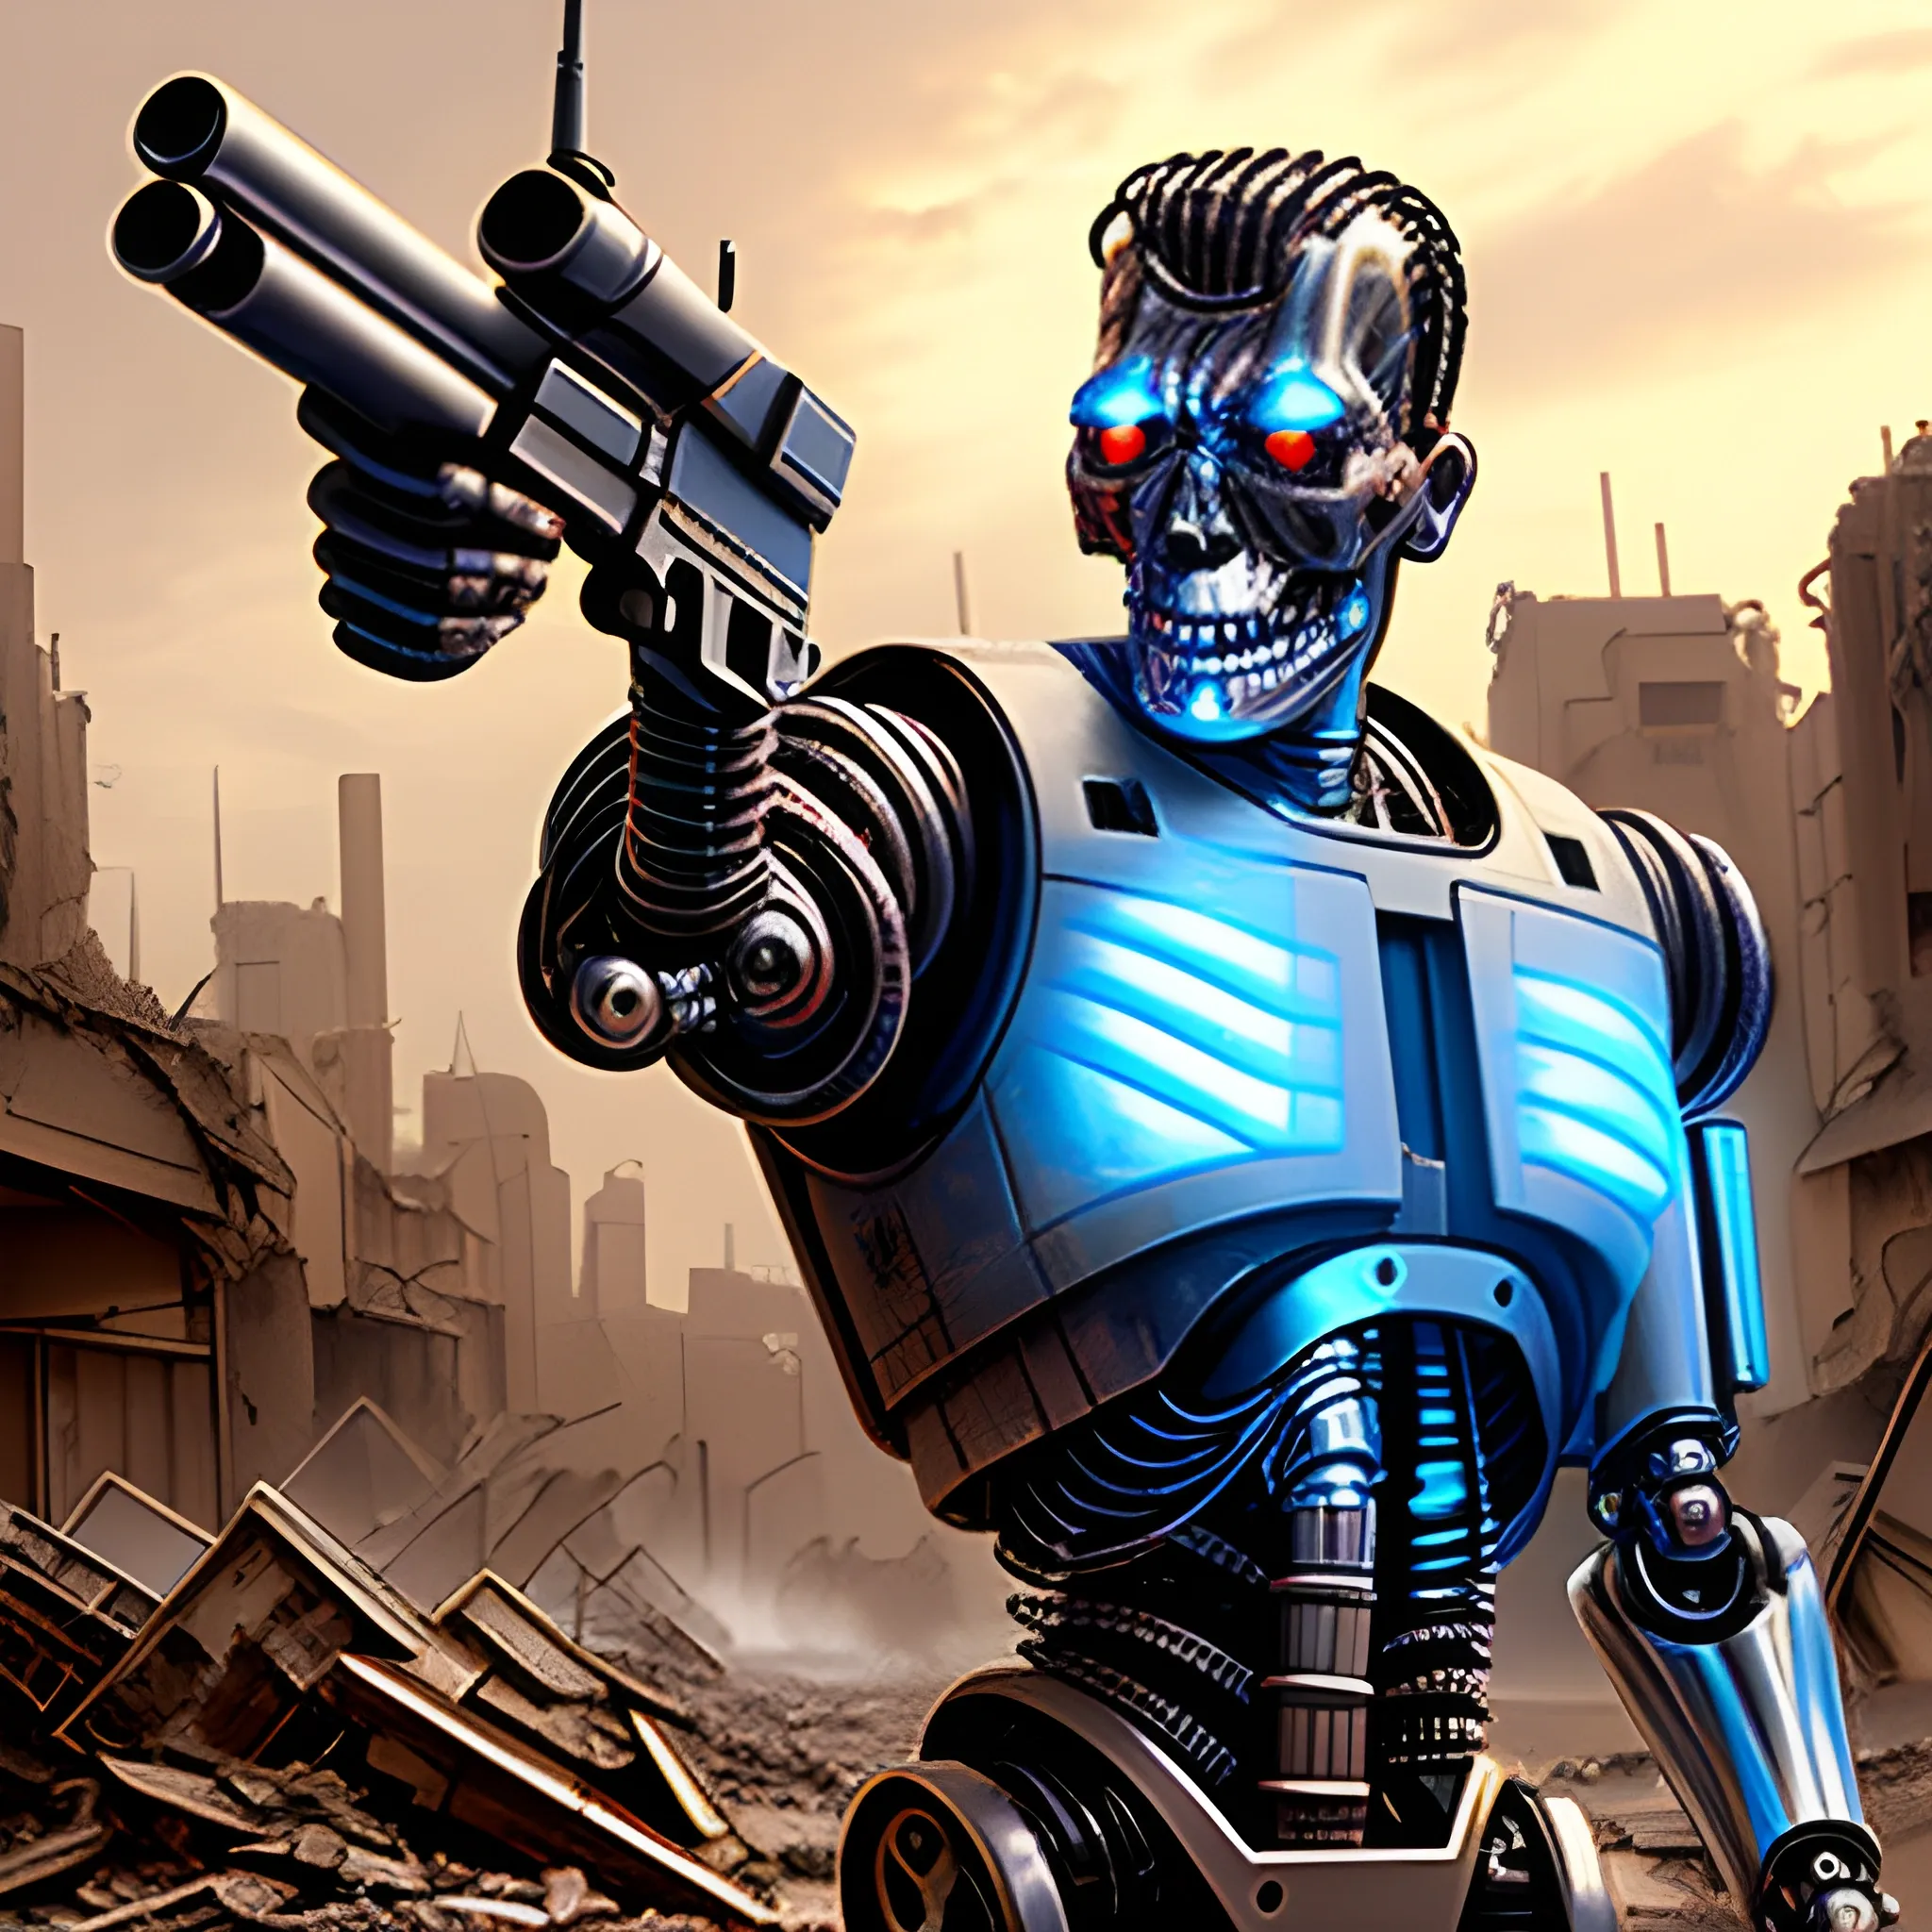 Terminator robot, sci-fi detail, holding gun, in ruins of city